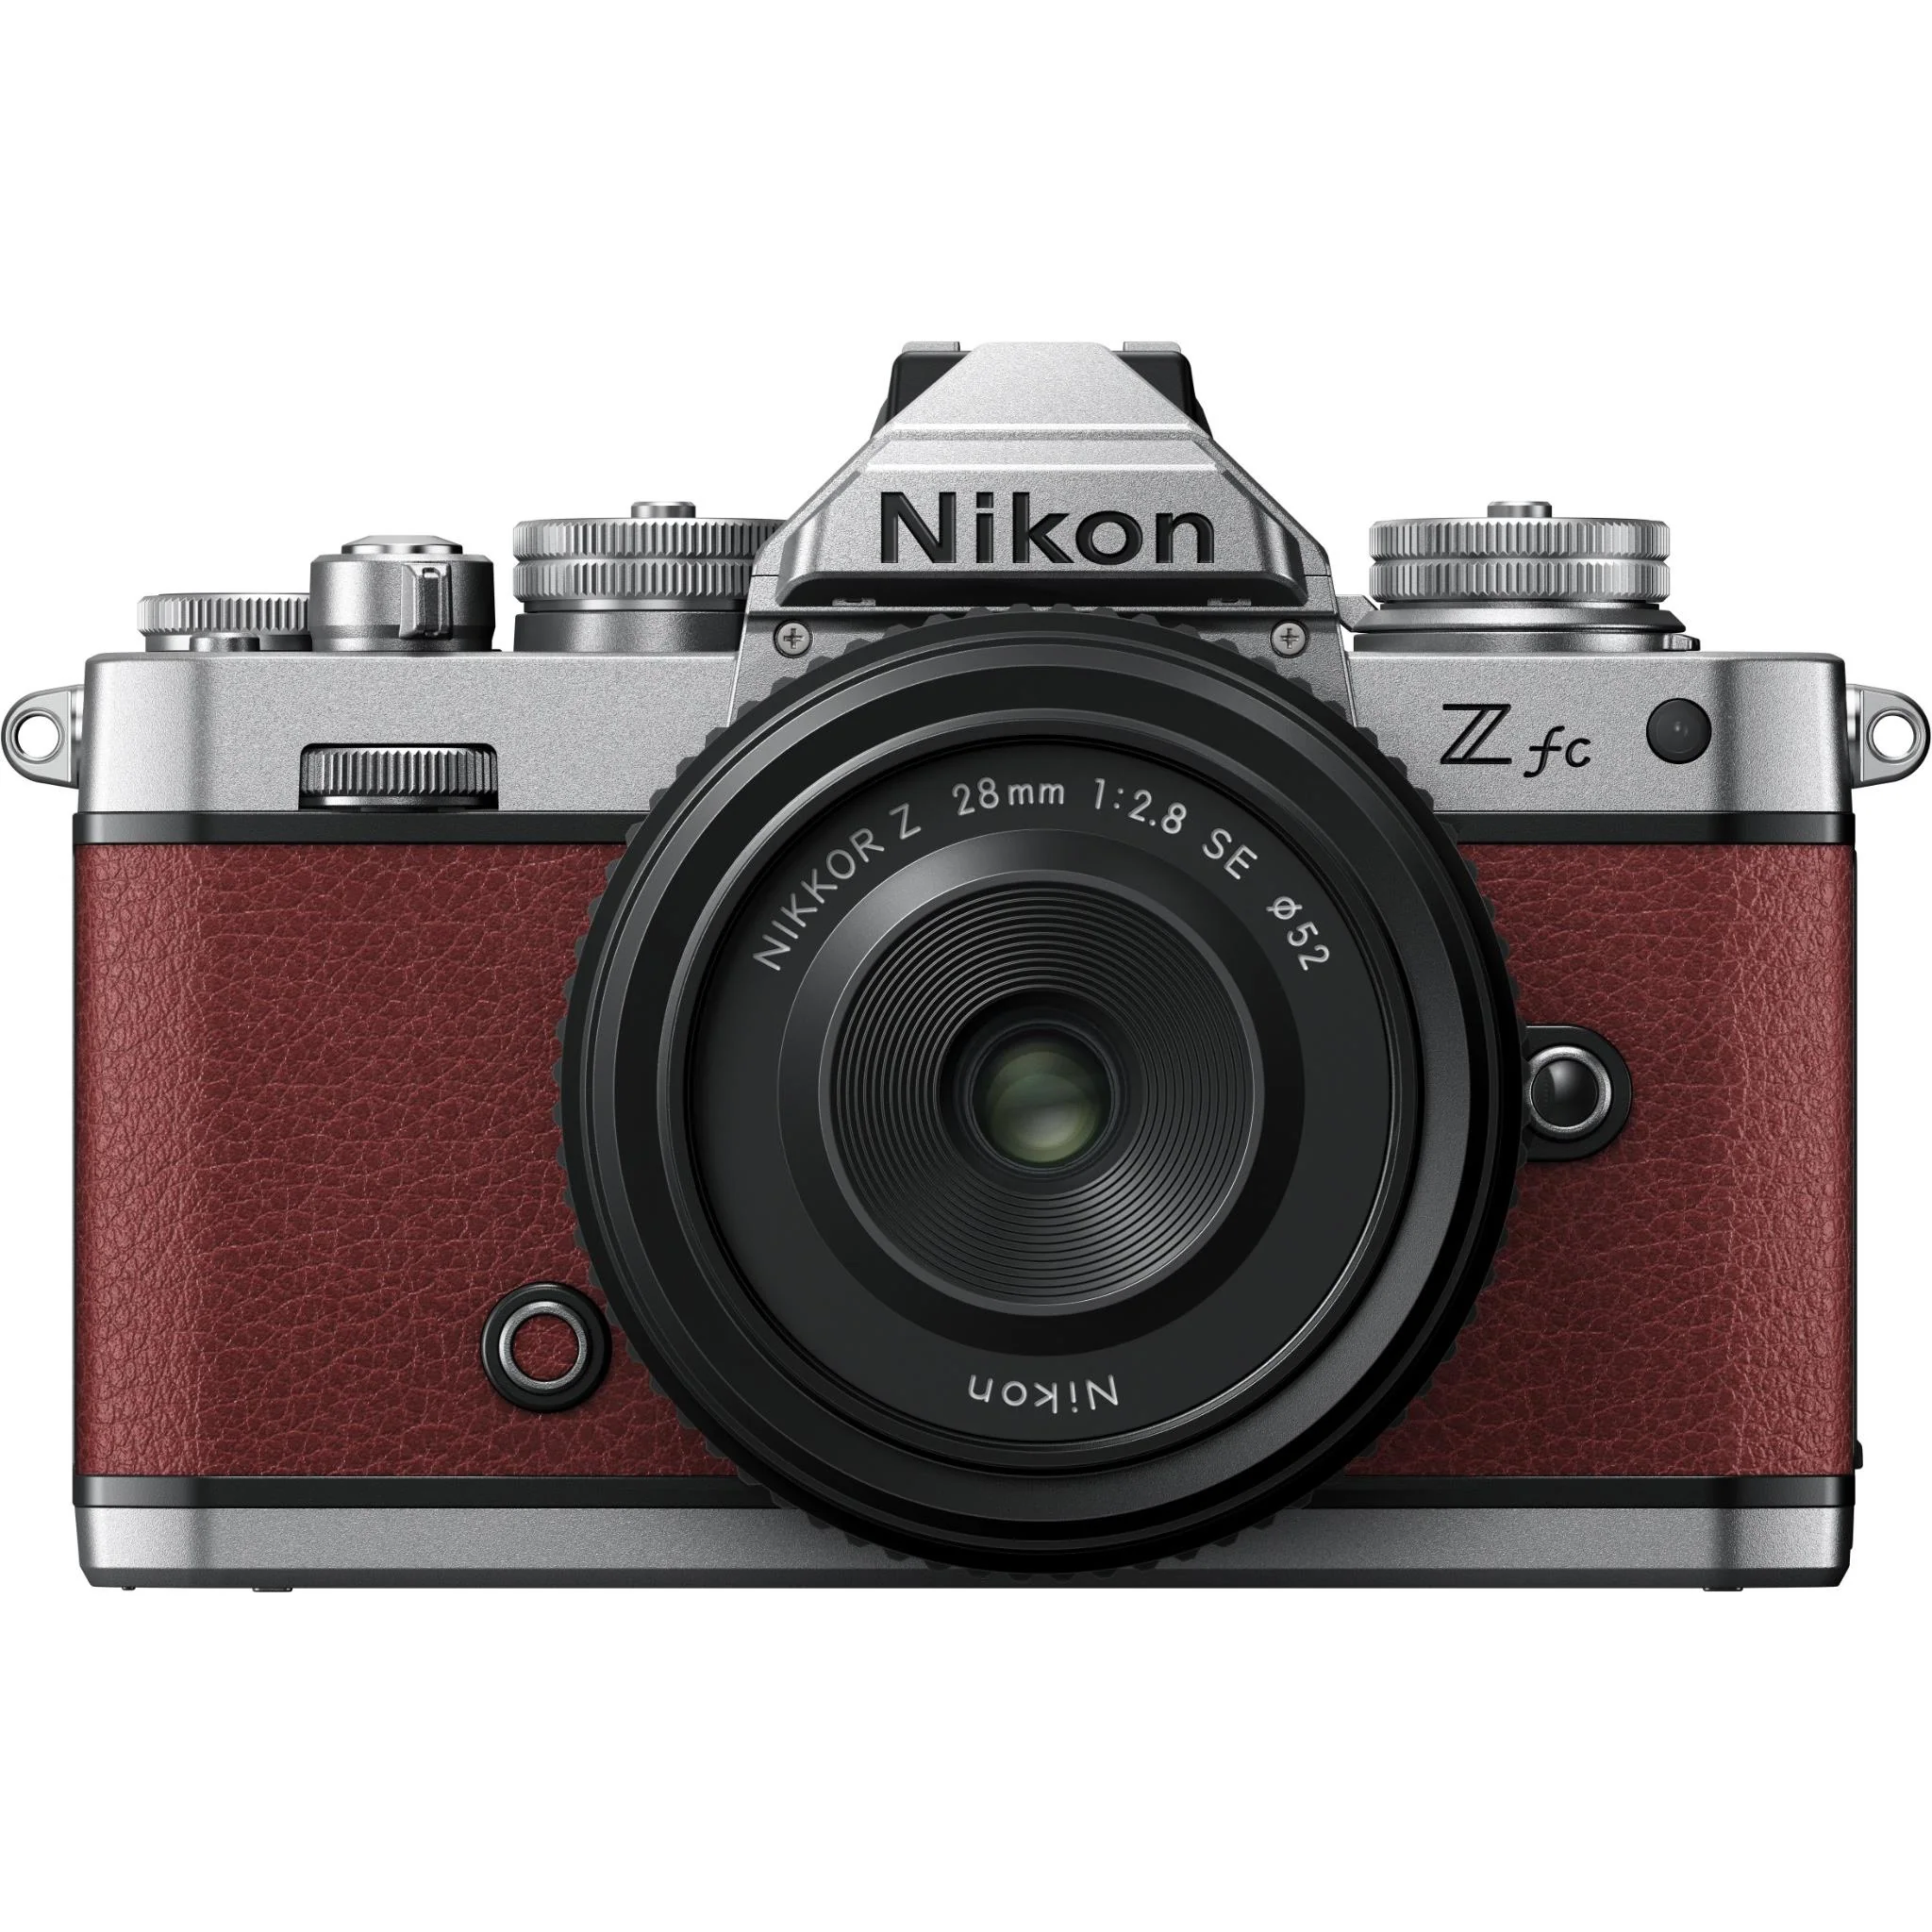 Nikon Z Fc Mirrorless Camera With Nikkor Z 28mm F/2.8 Lens (Crimons Red)